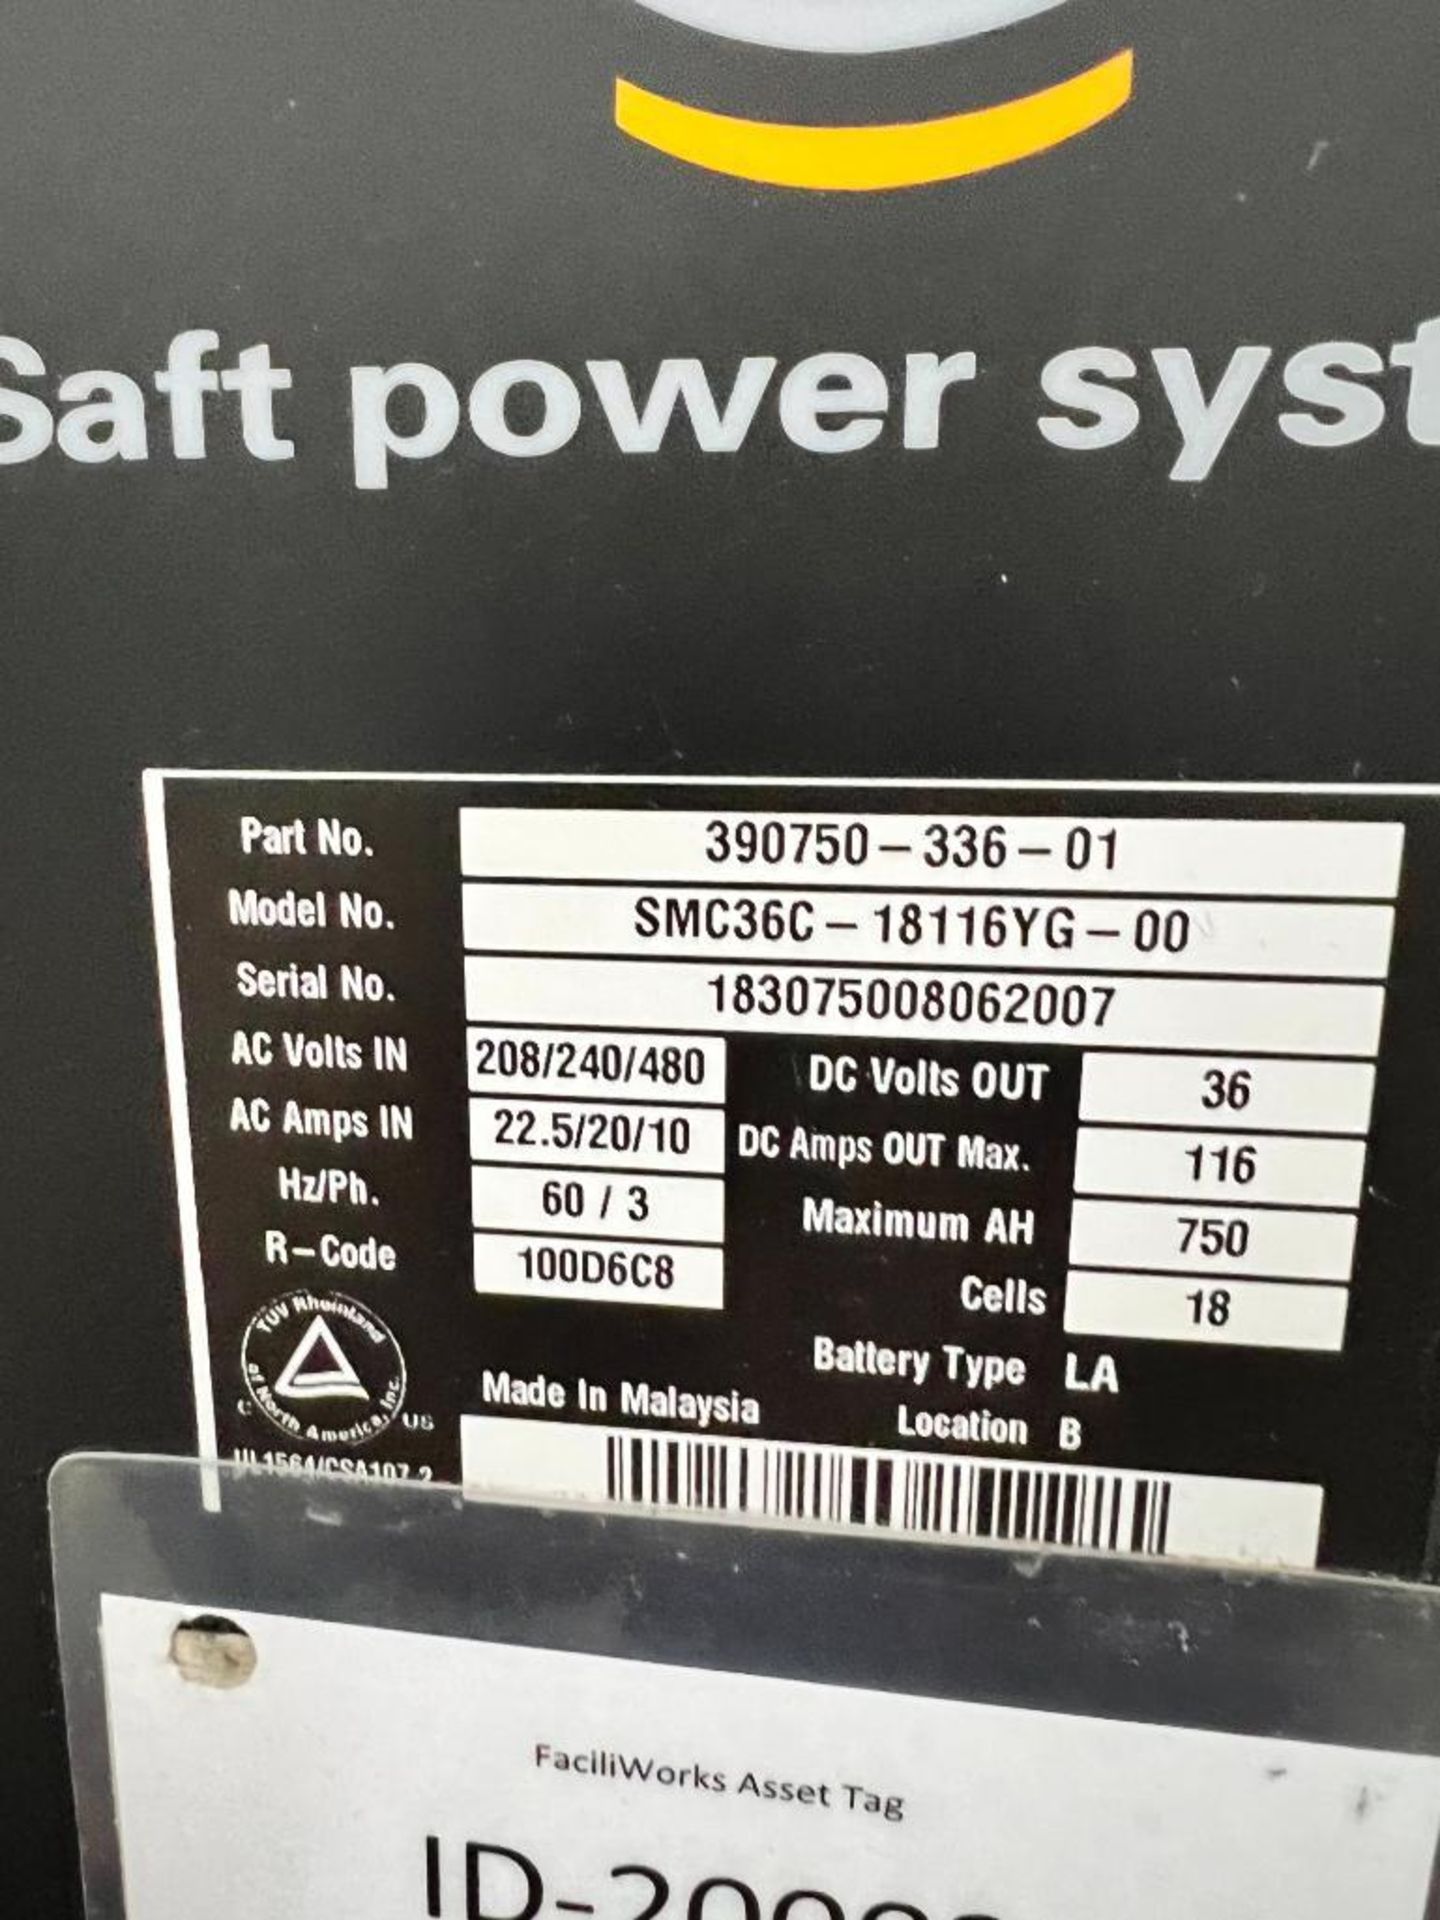 Saft Power Systems 36 V Battery Charger, Model SMC36C-18116YG, S/N 183075008062007 - Image 3 of 3